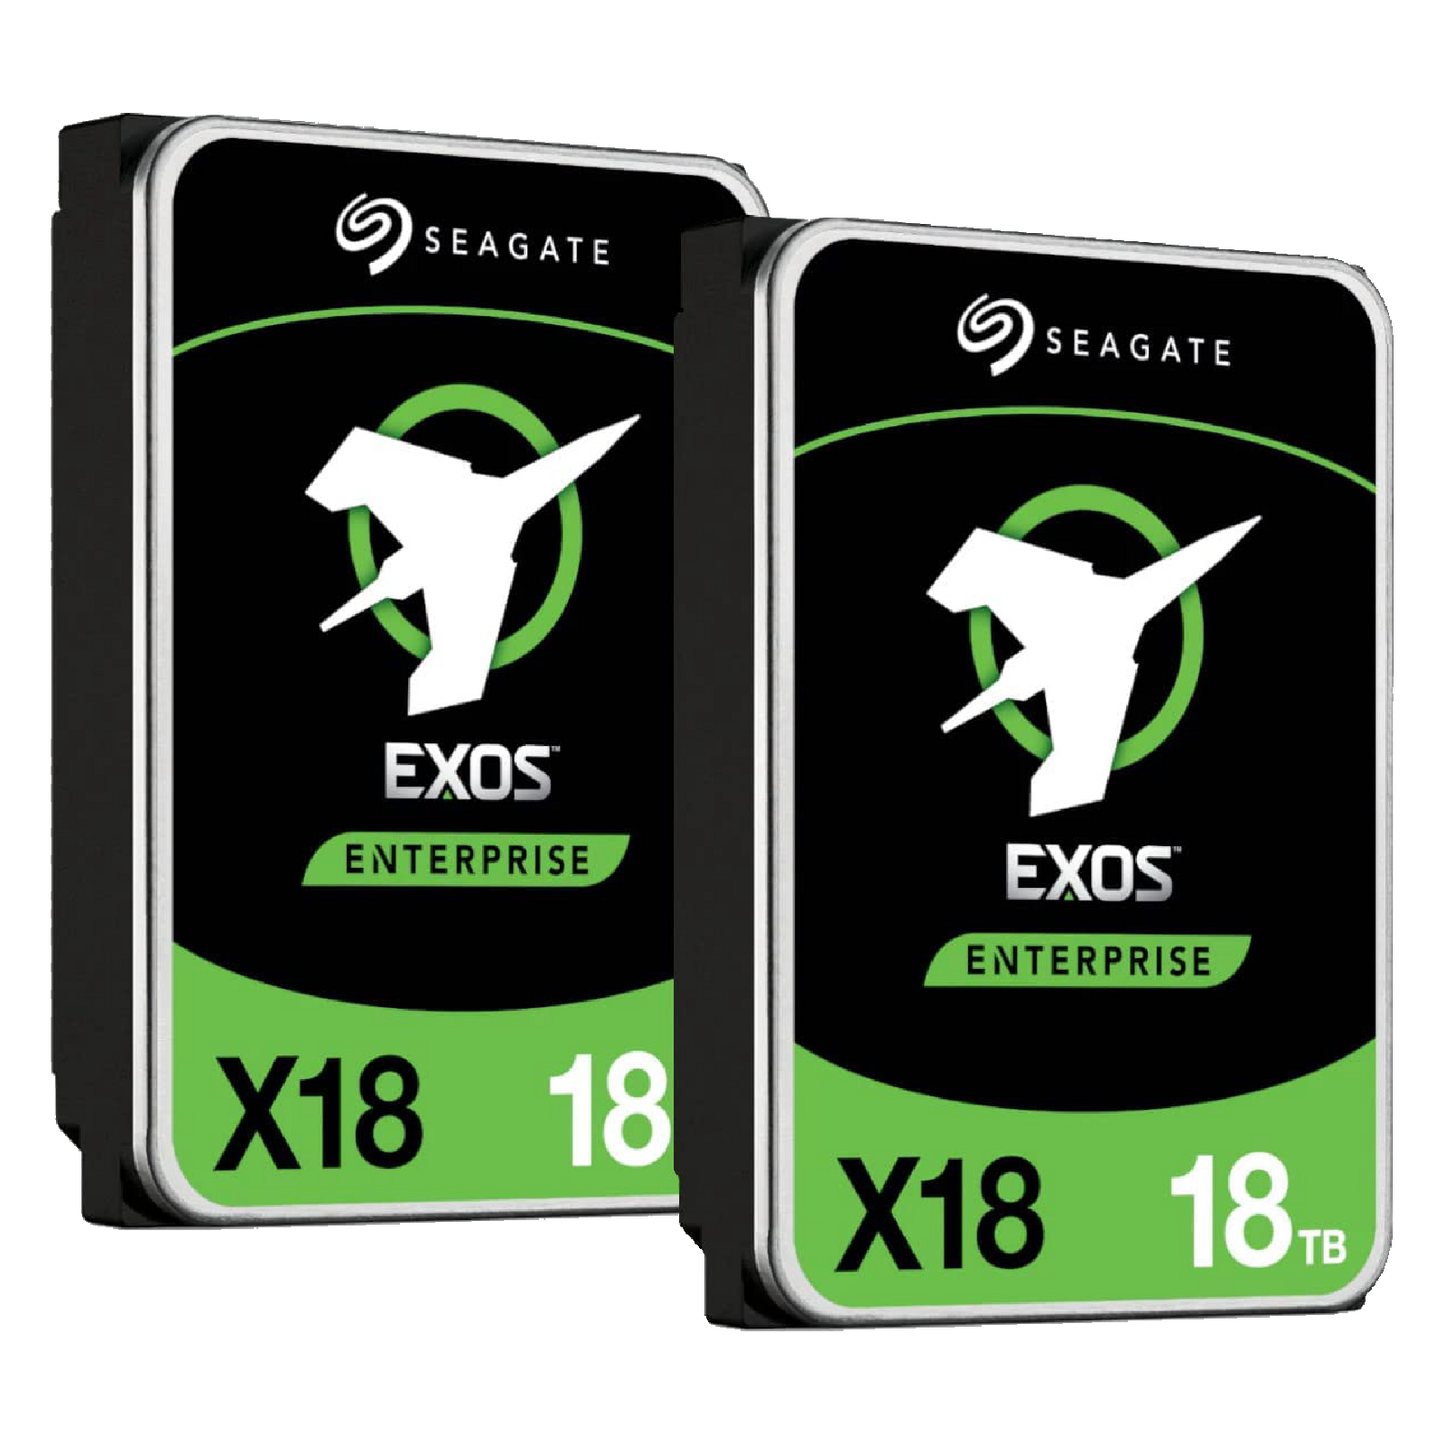 Seagate EXOS X18 18TB ST18000NM000J SATA CMR 3.5" Enterprise Hard Drive OEM